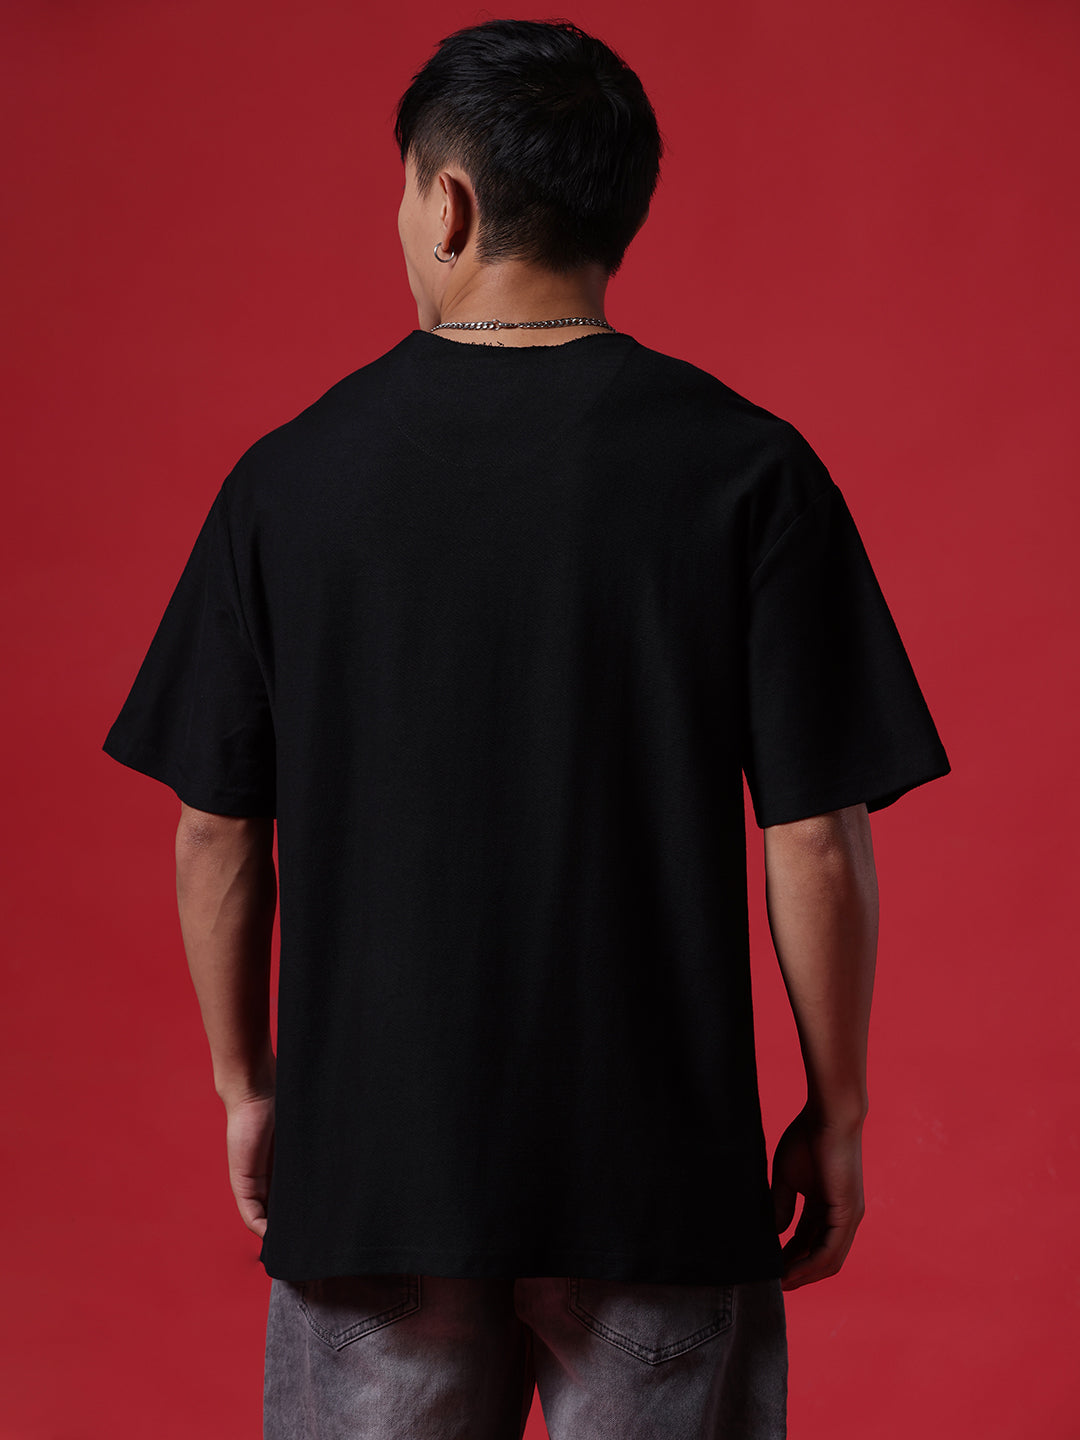 Wrogn Silhouette Black T-Shirt